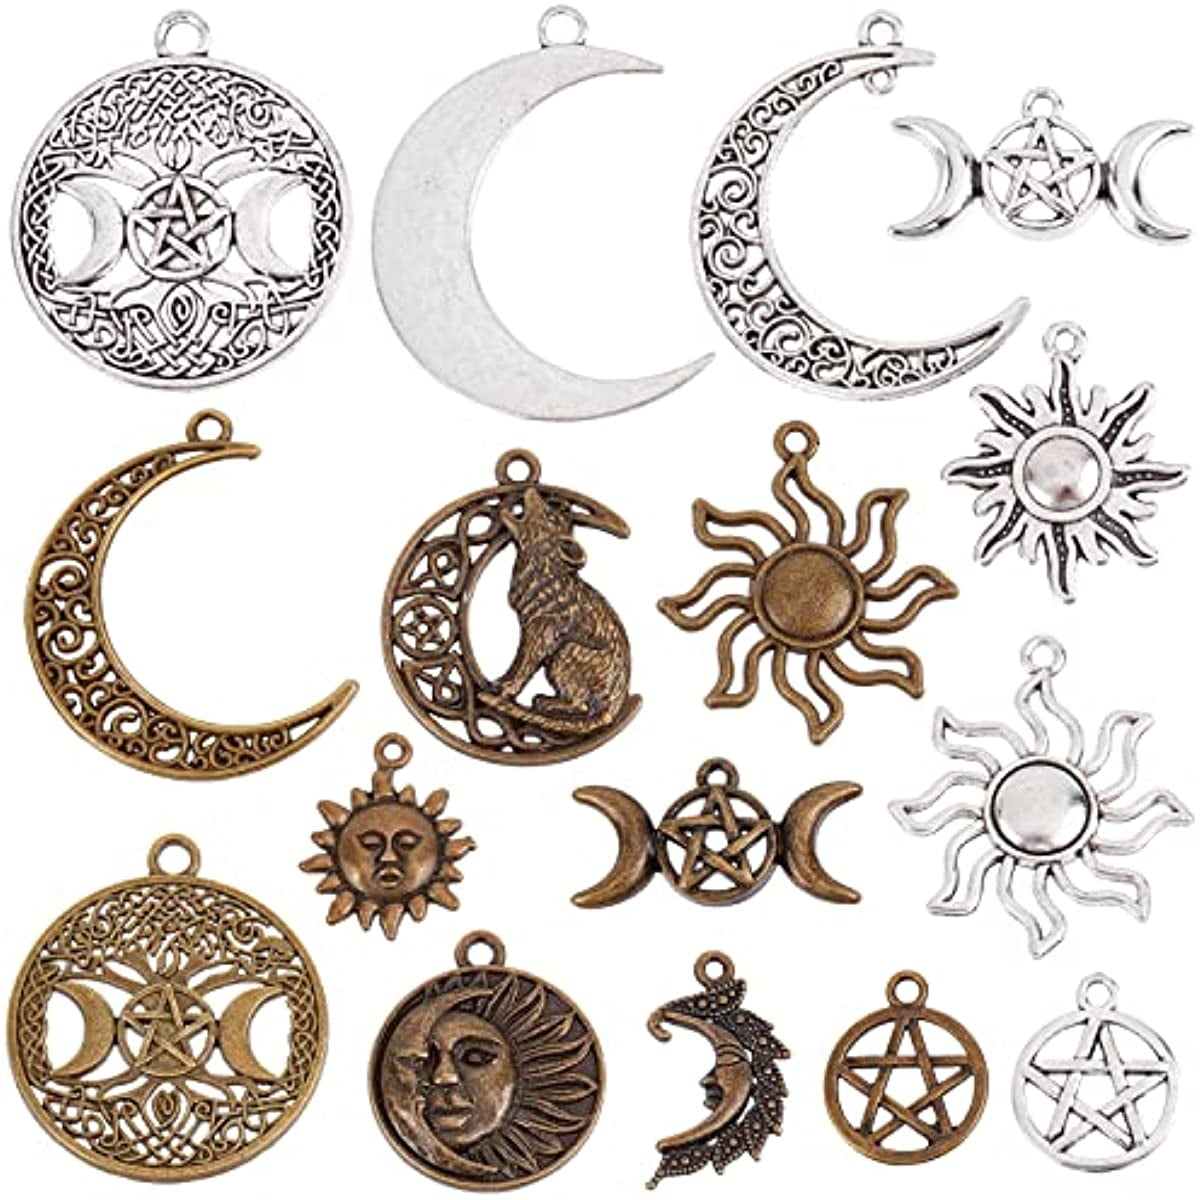 6pcs/lot Kawaii Summer Themed , Sun, Coconut Tree Design Resin Charms For  Jewelry Making, Diy Keychain, Earrings, Pendant Etc.